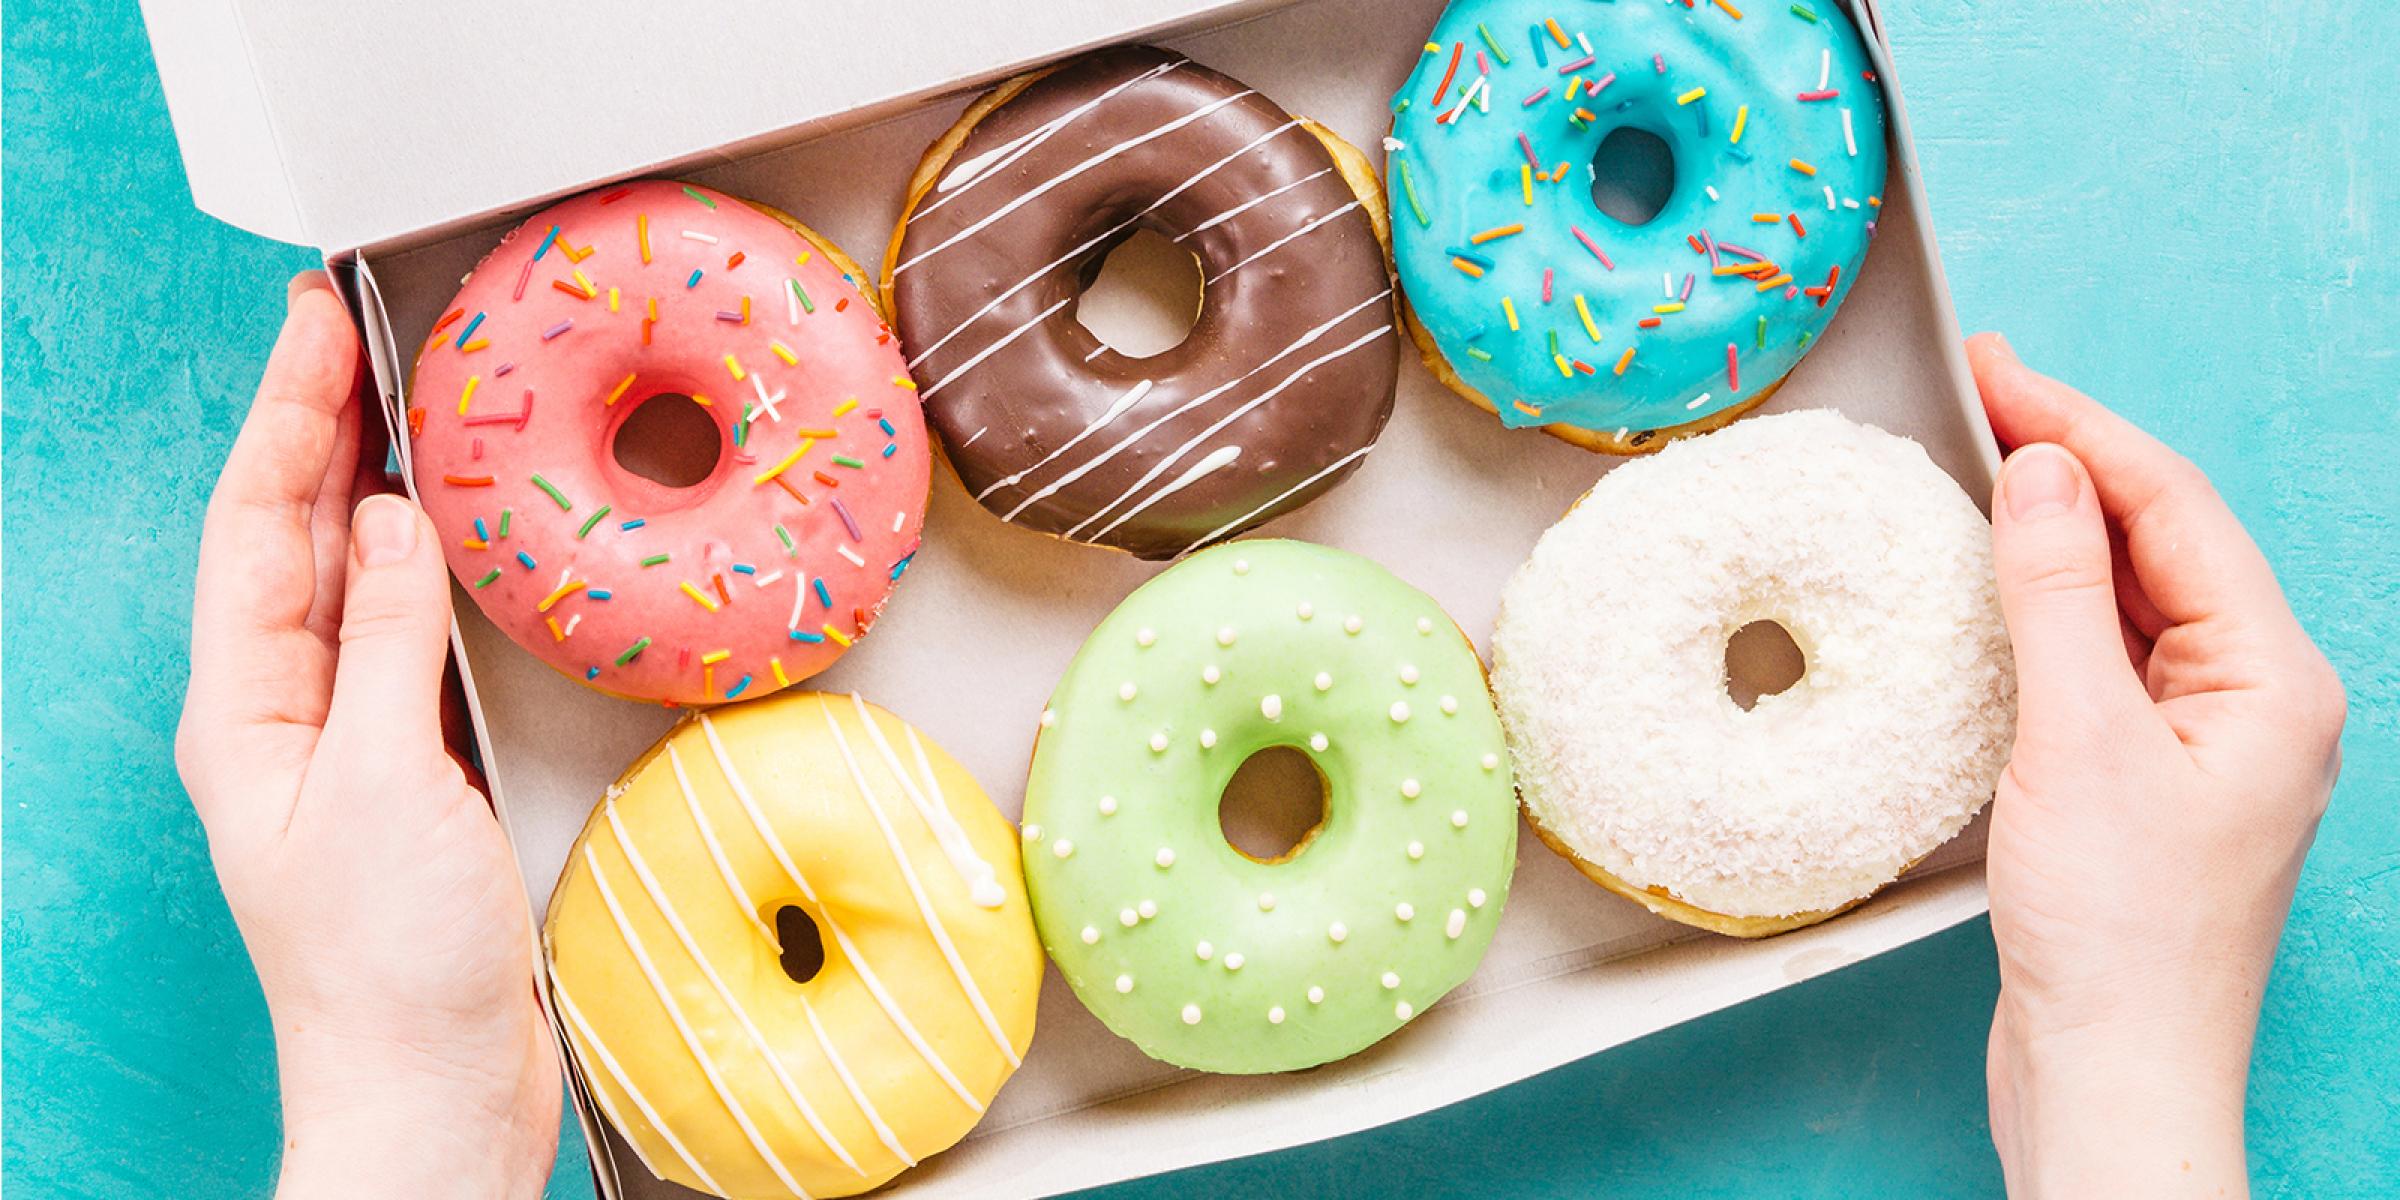 A box of doughnuts